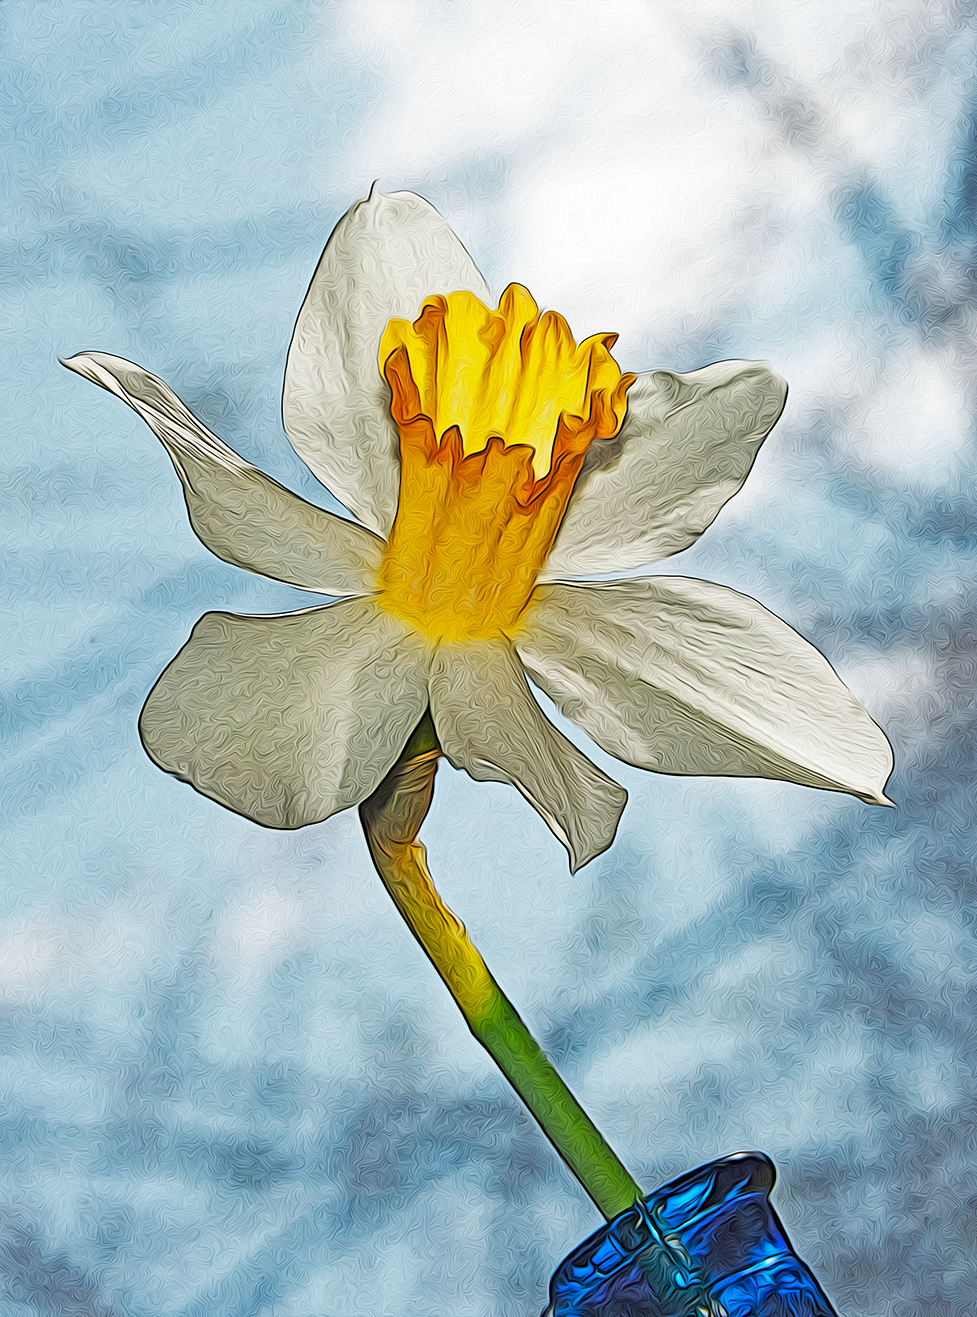 The Tazetta Daffodil aka Narcissus Geranium at 3 Dog Acres in the rural Ozark Highlands on 7 April 2022